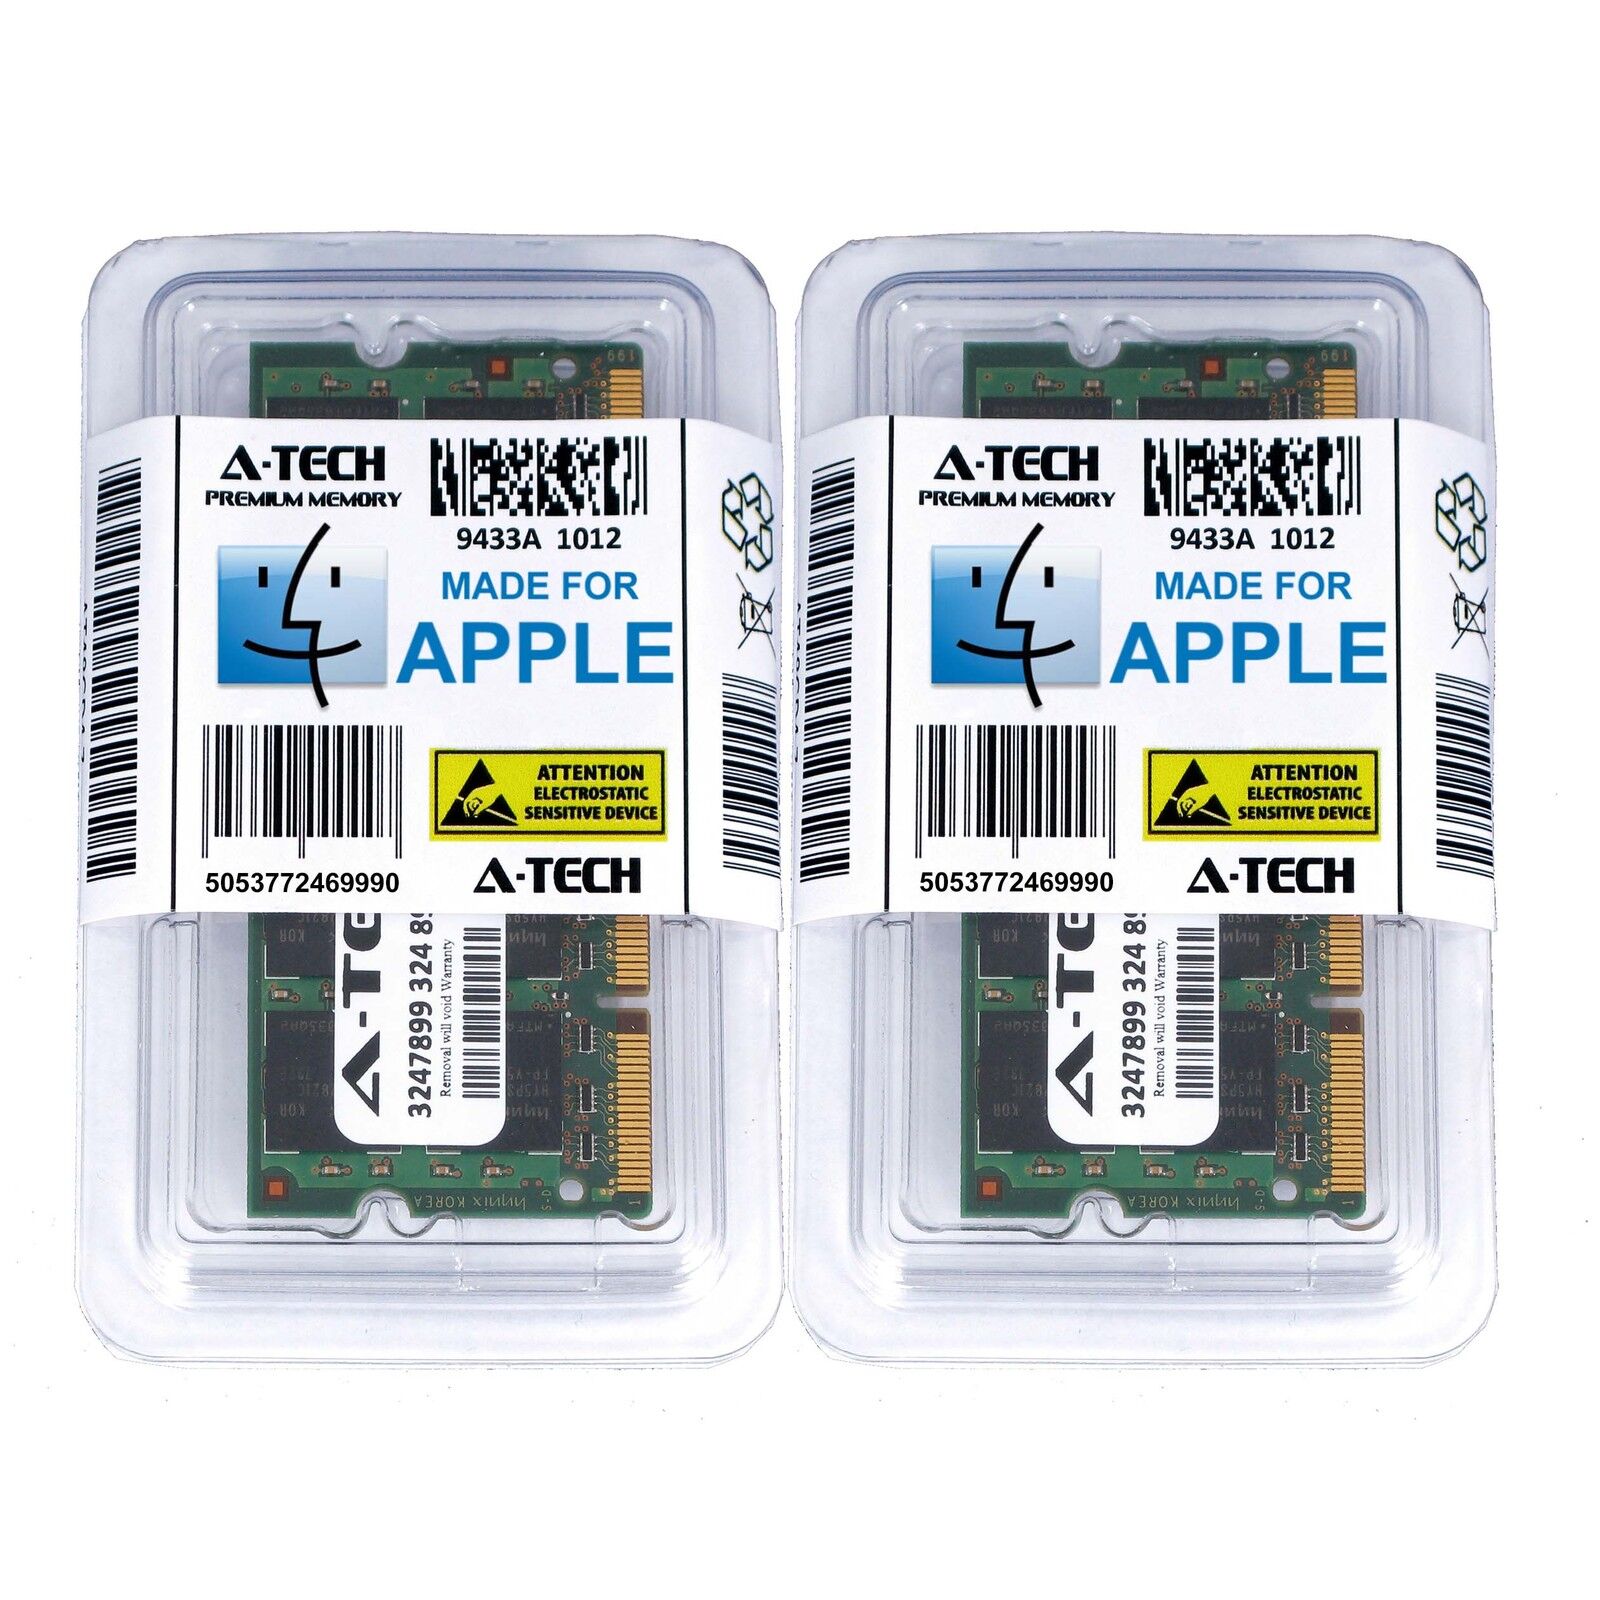 6GB Kit 4GB & 2GB PC2-5300 667 MHz SODIMM Memory RAM for APPLE MacBook Pro iMac